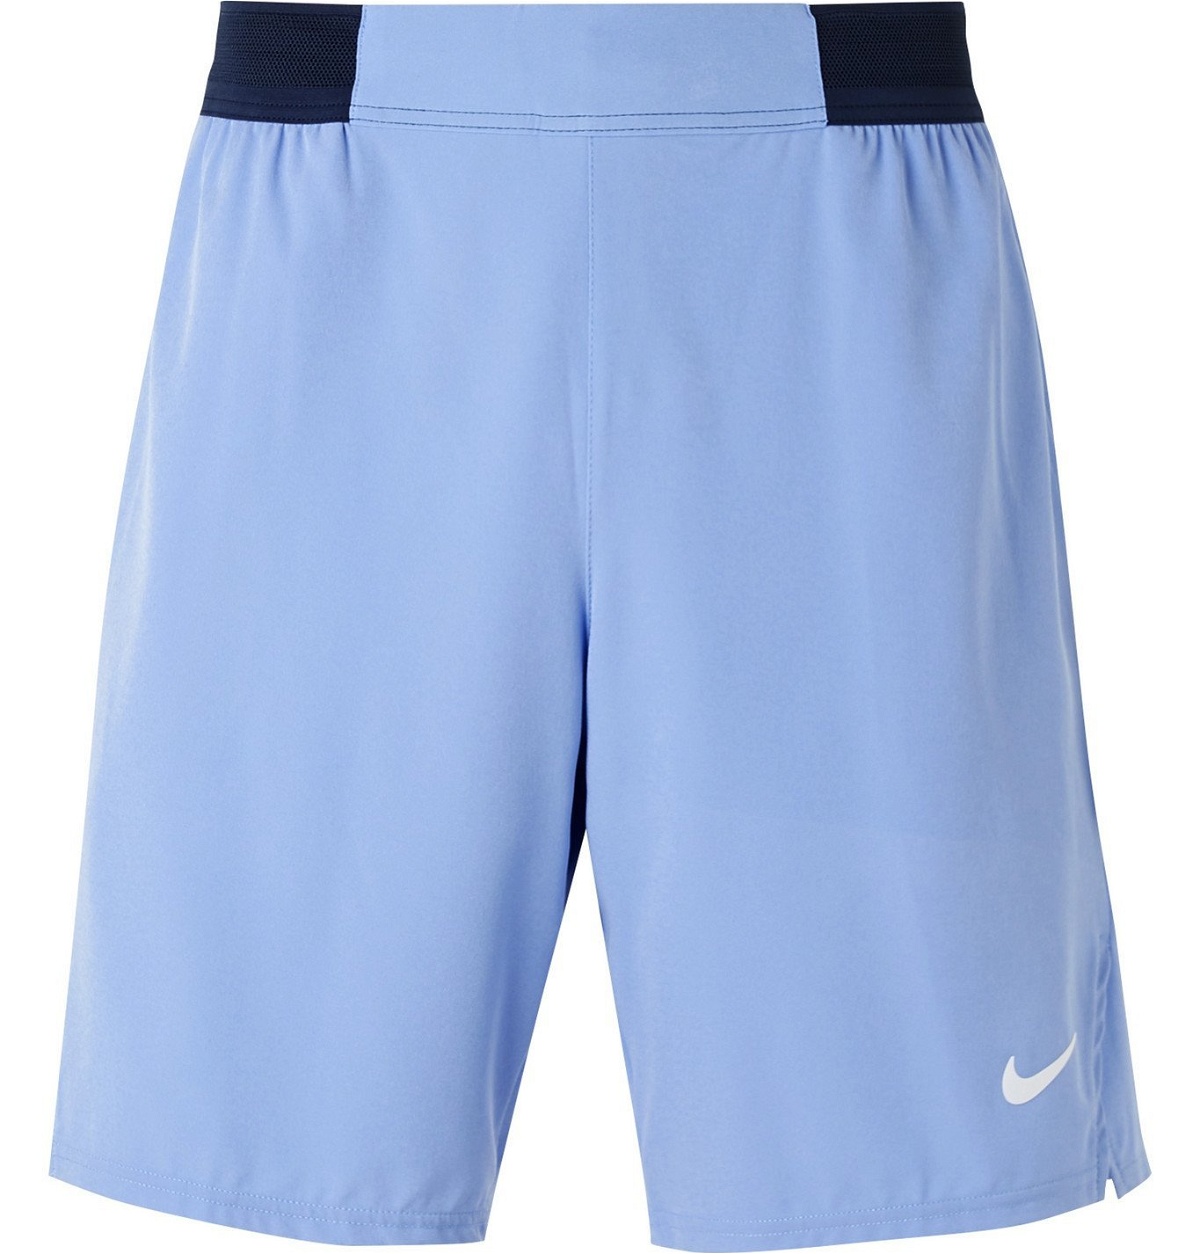 Nike Tennis - Ace Flex Tennis Shorts - Blue Nike Tennis